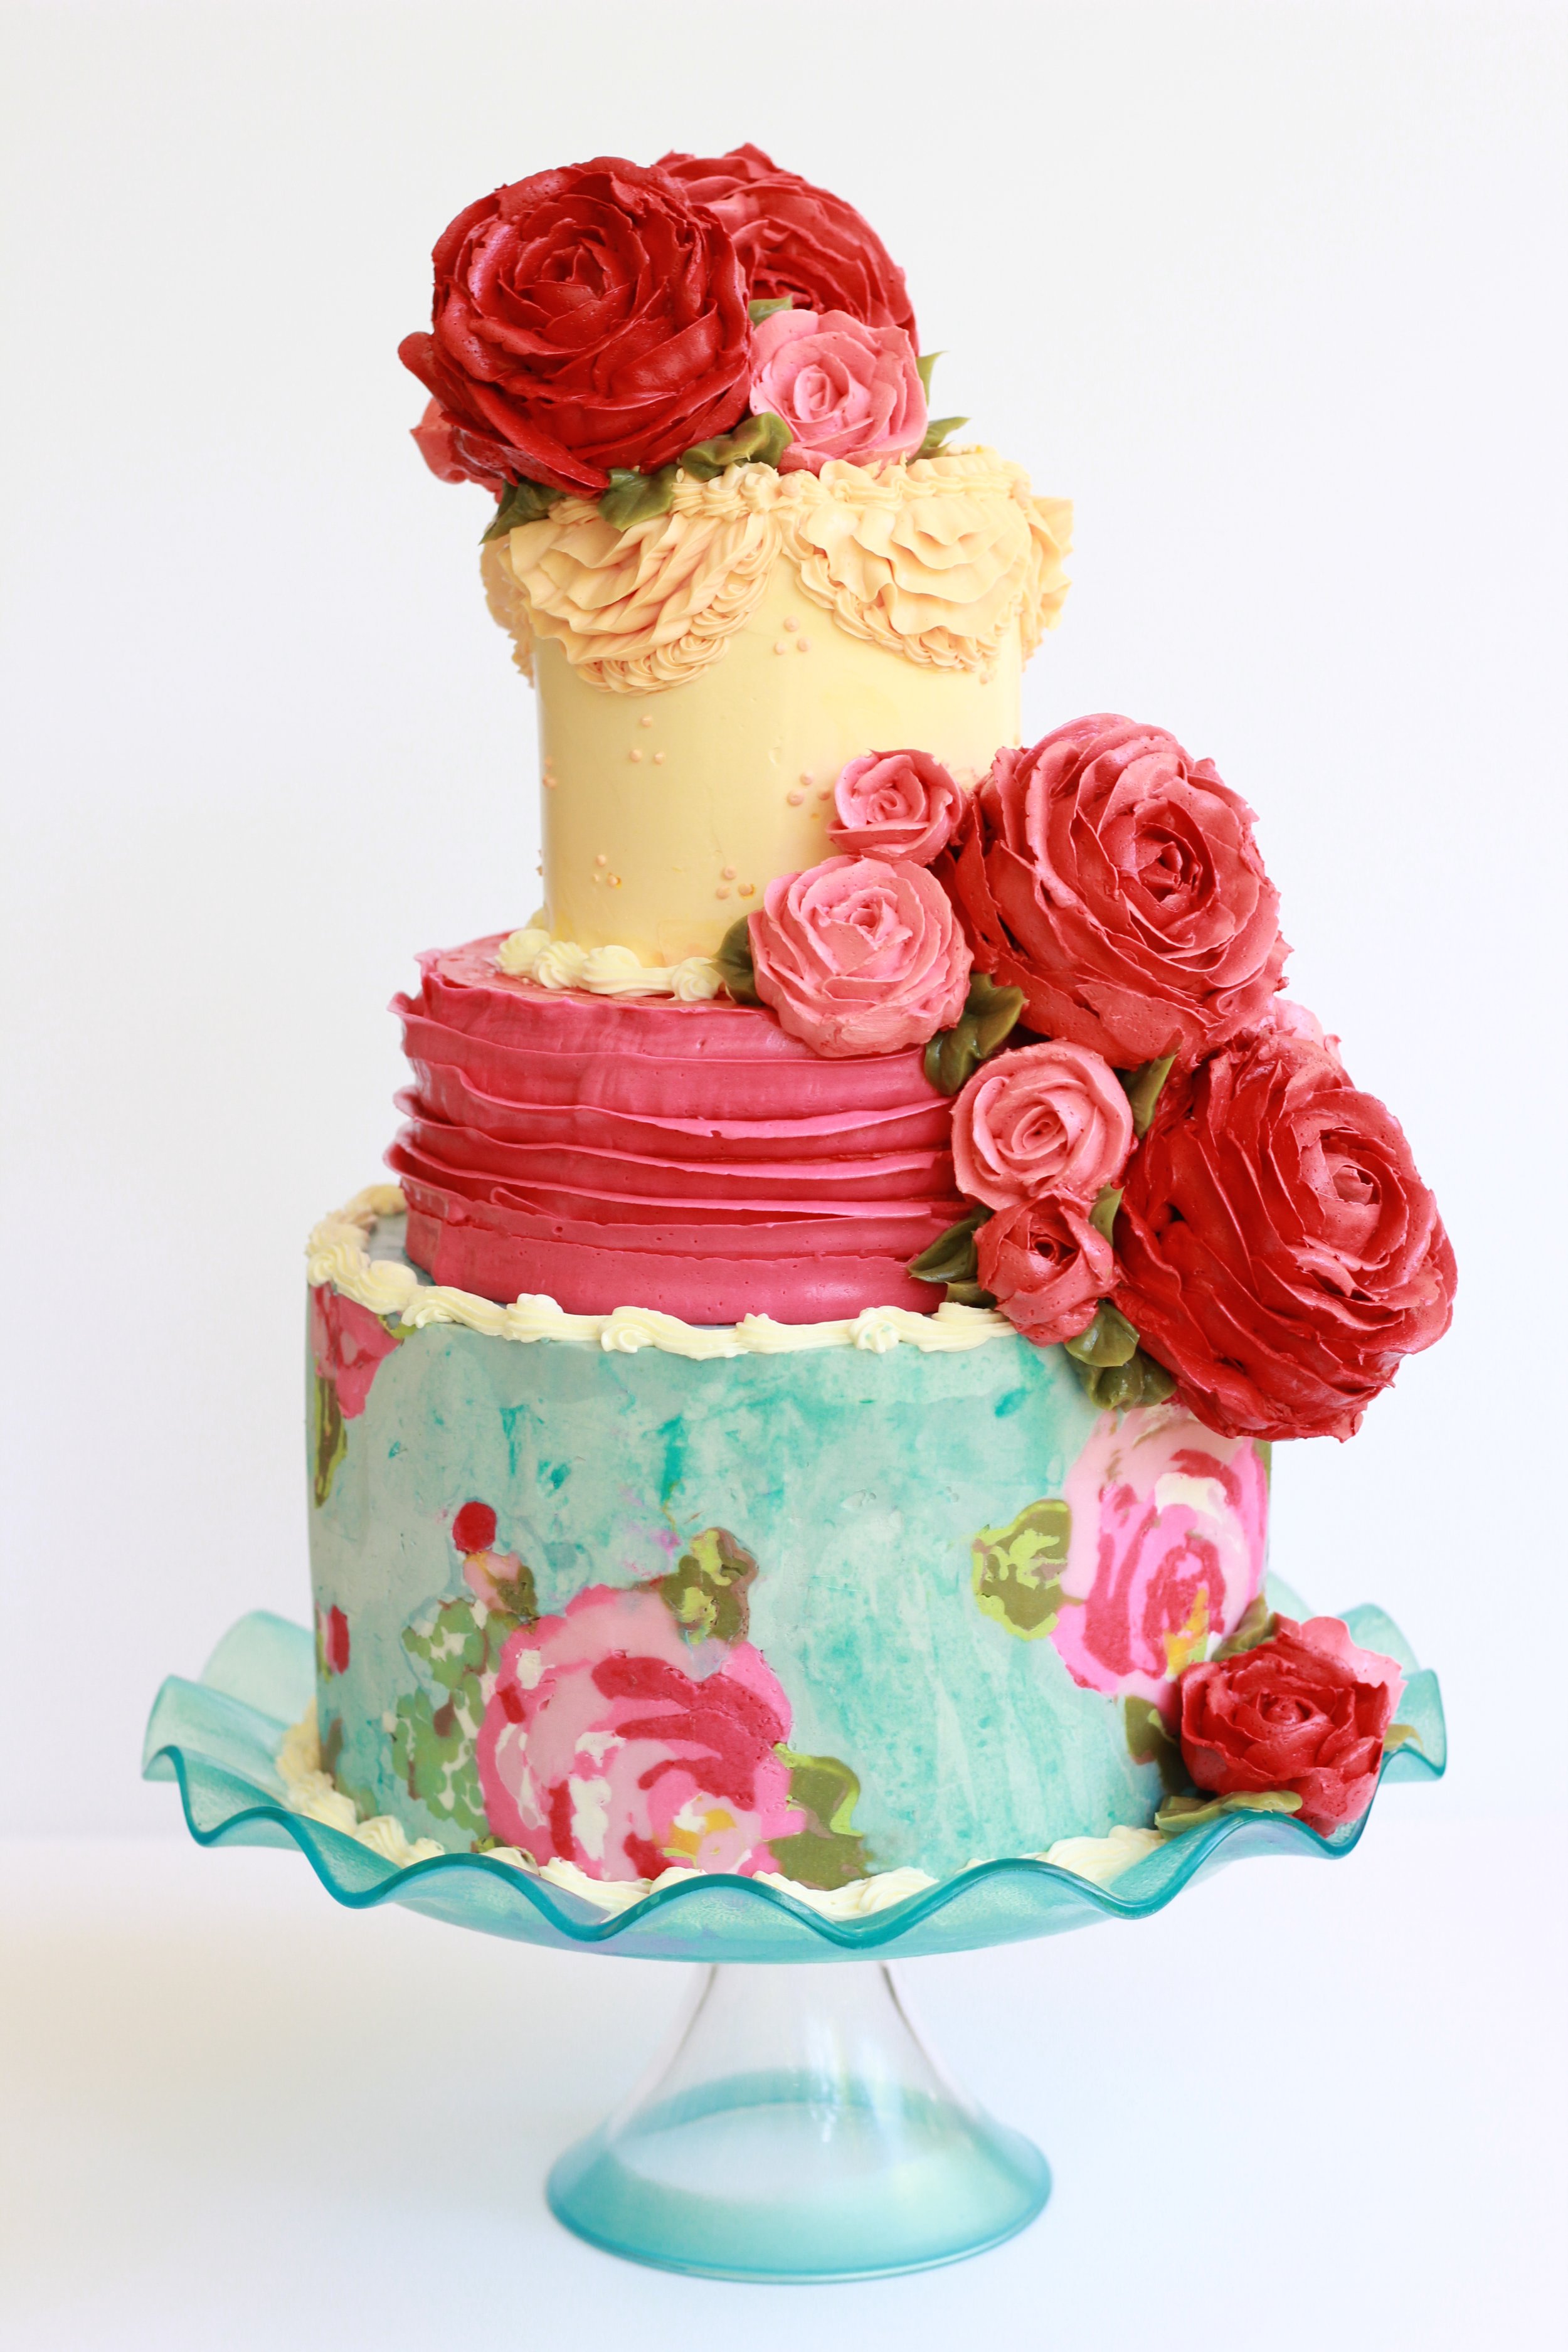 Buttercream Floral Cake_Reva Alexander-Hawk_Georgia Baker.jpeg